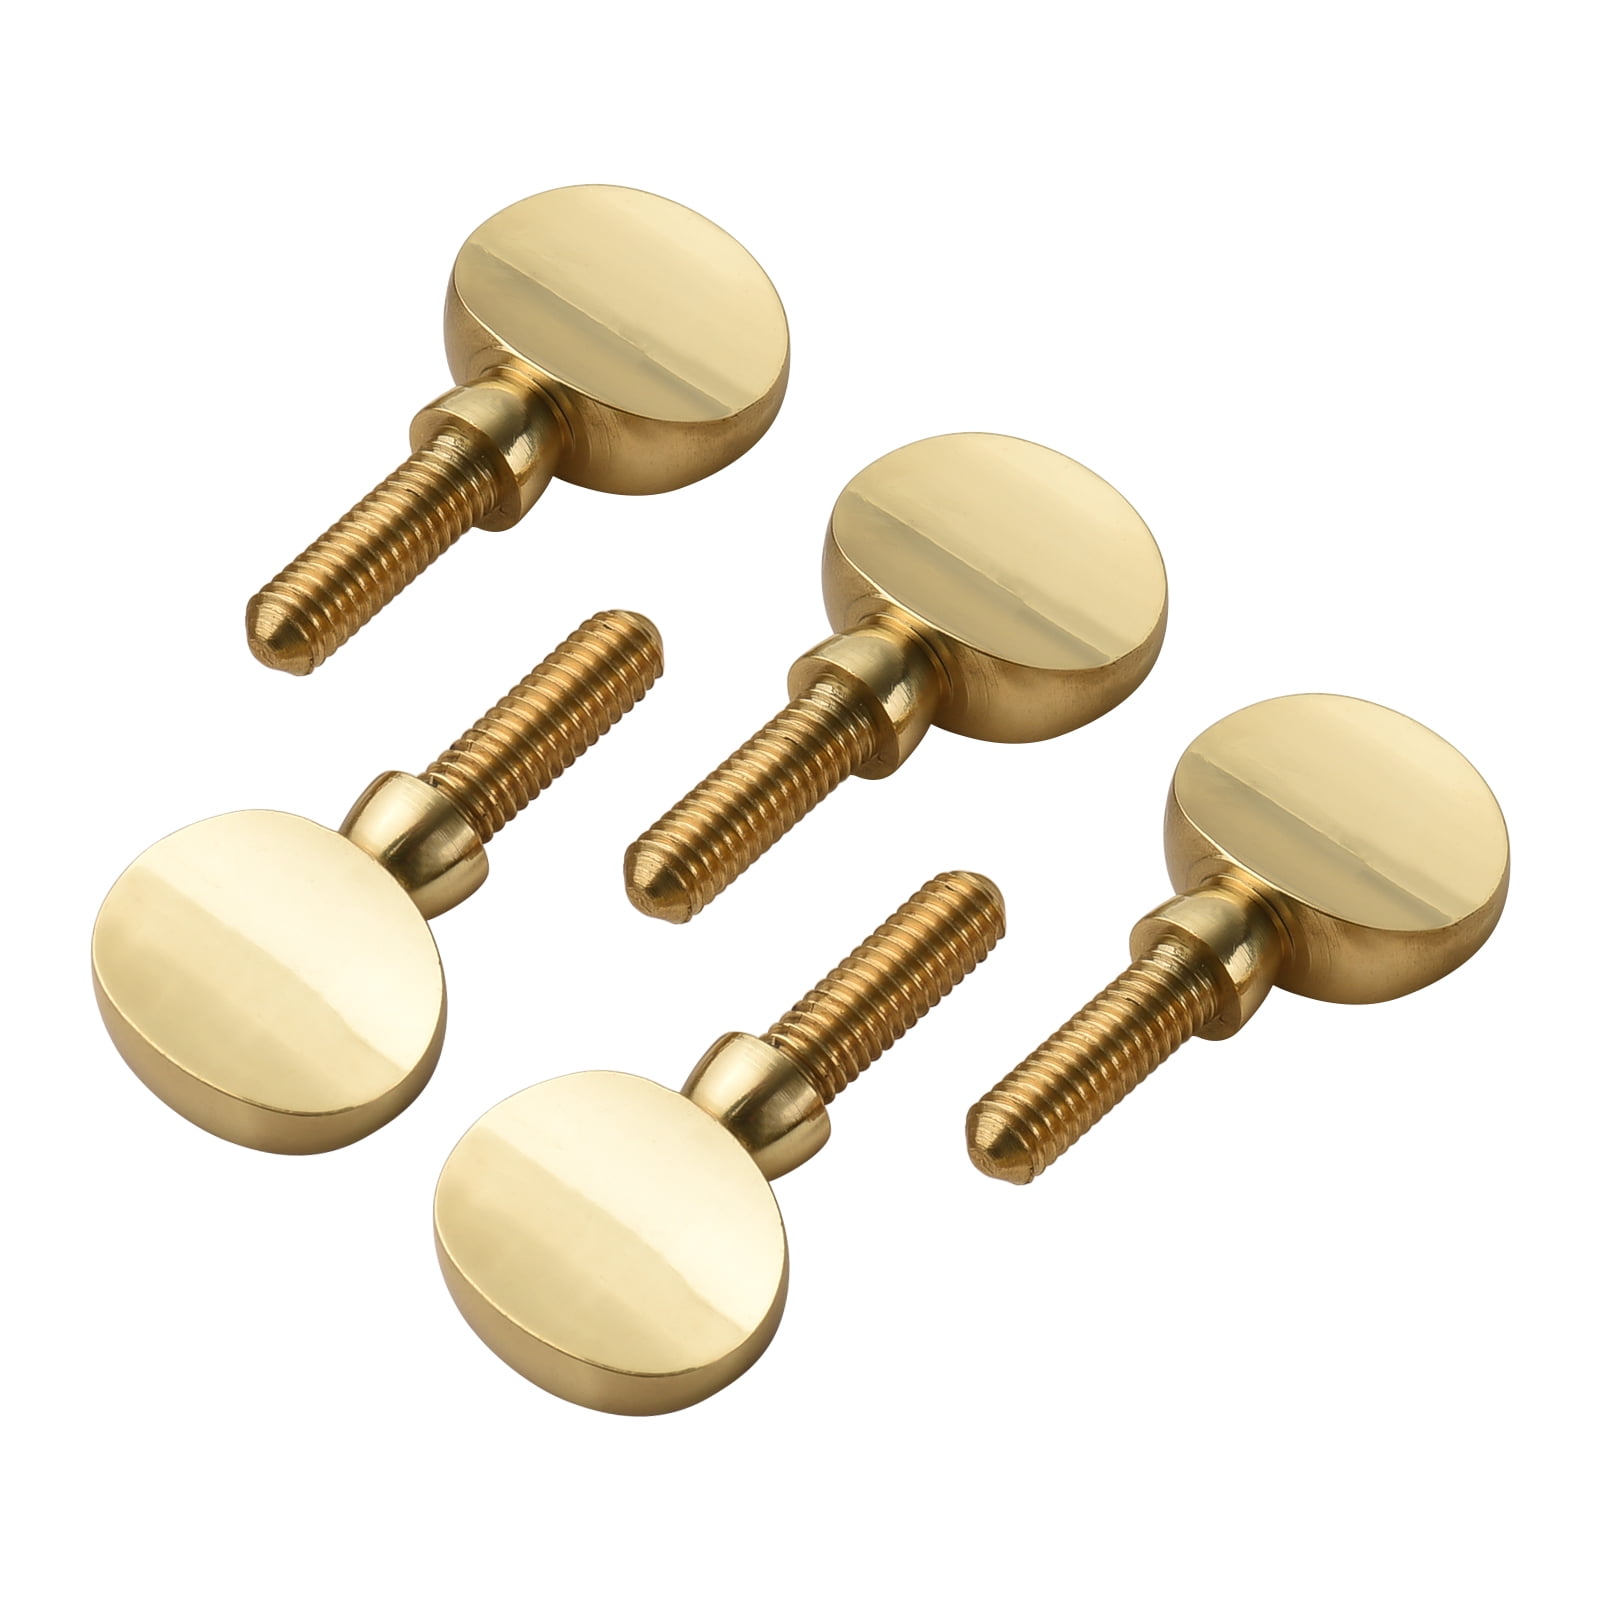 Yibuy Golden Copper Saxophone Neck Tightening Screws Set of 5 